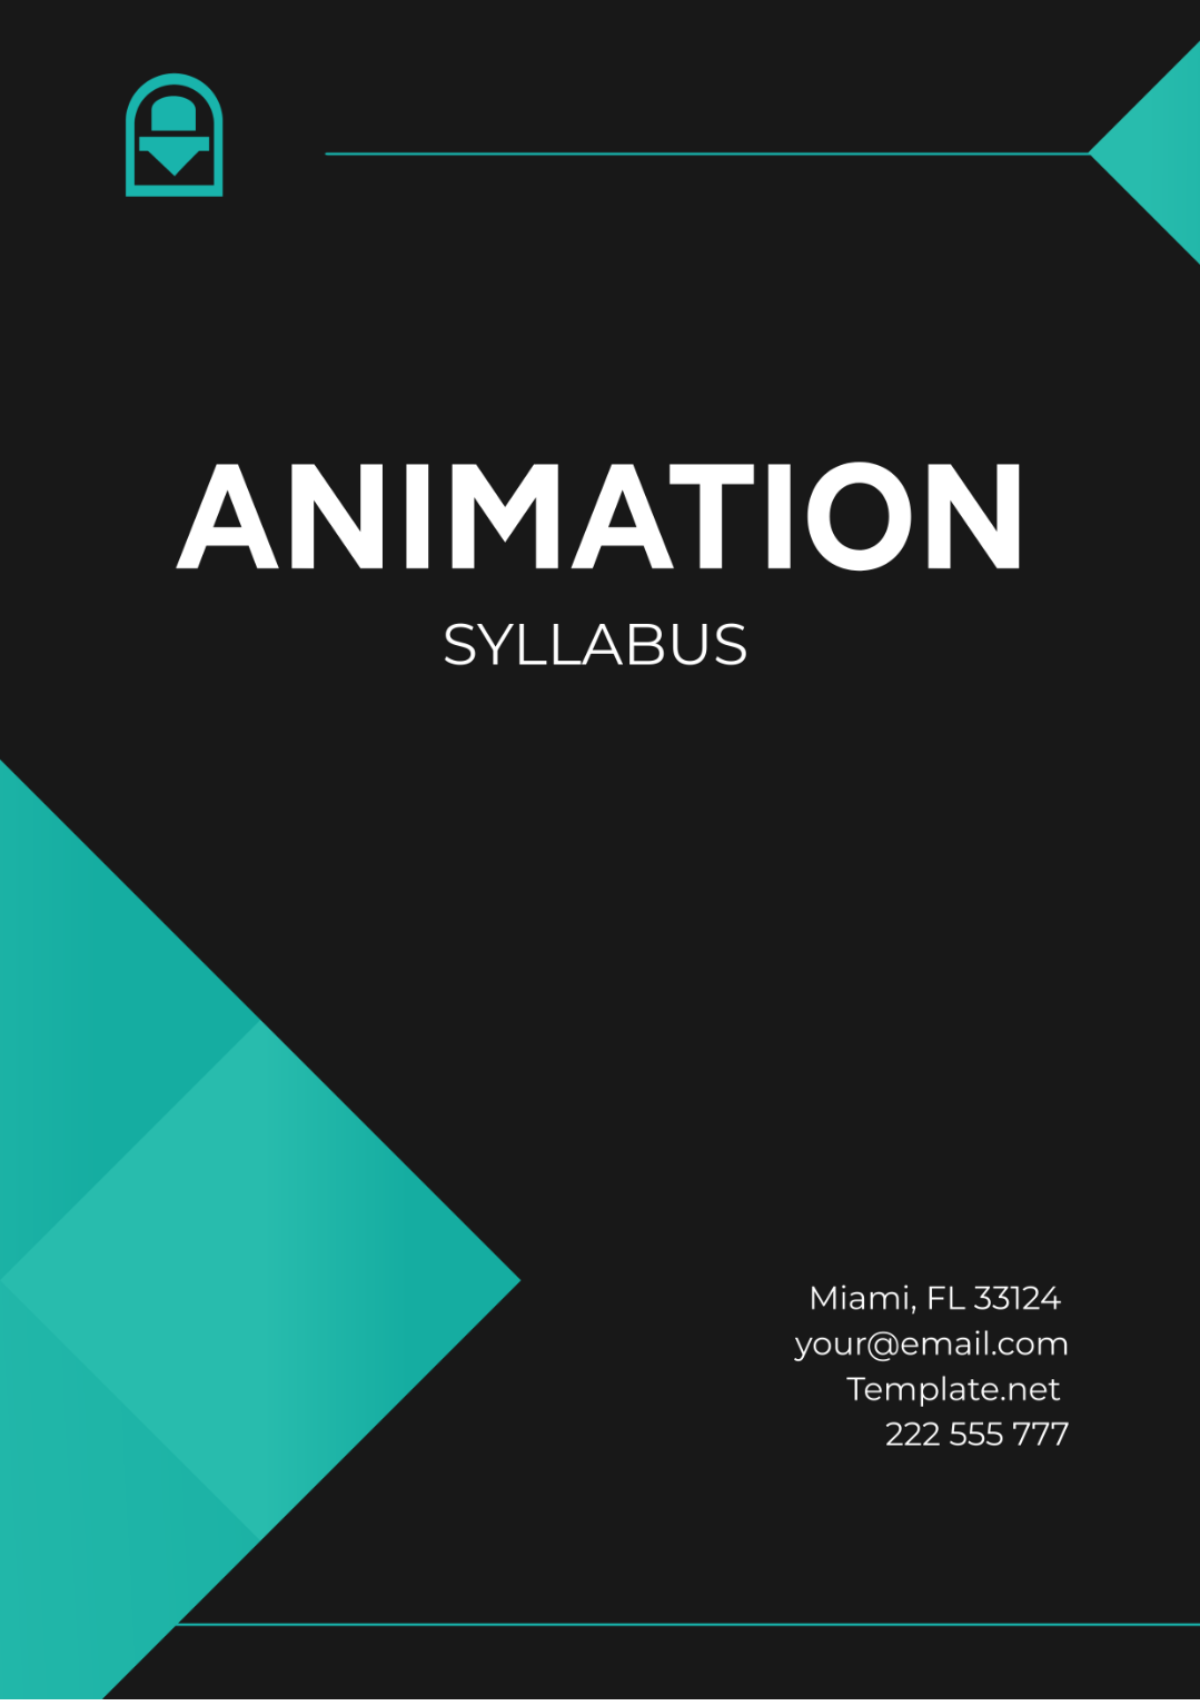 Animation Syllabus Template